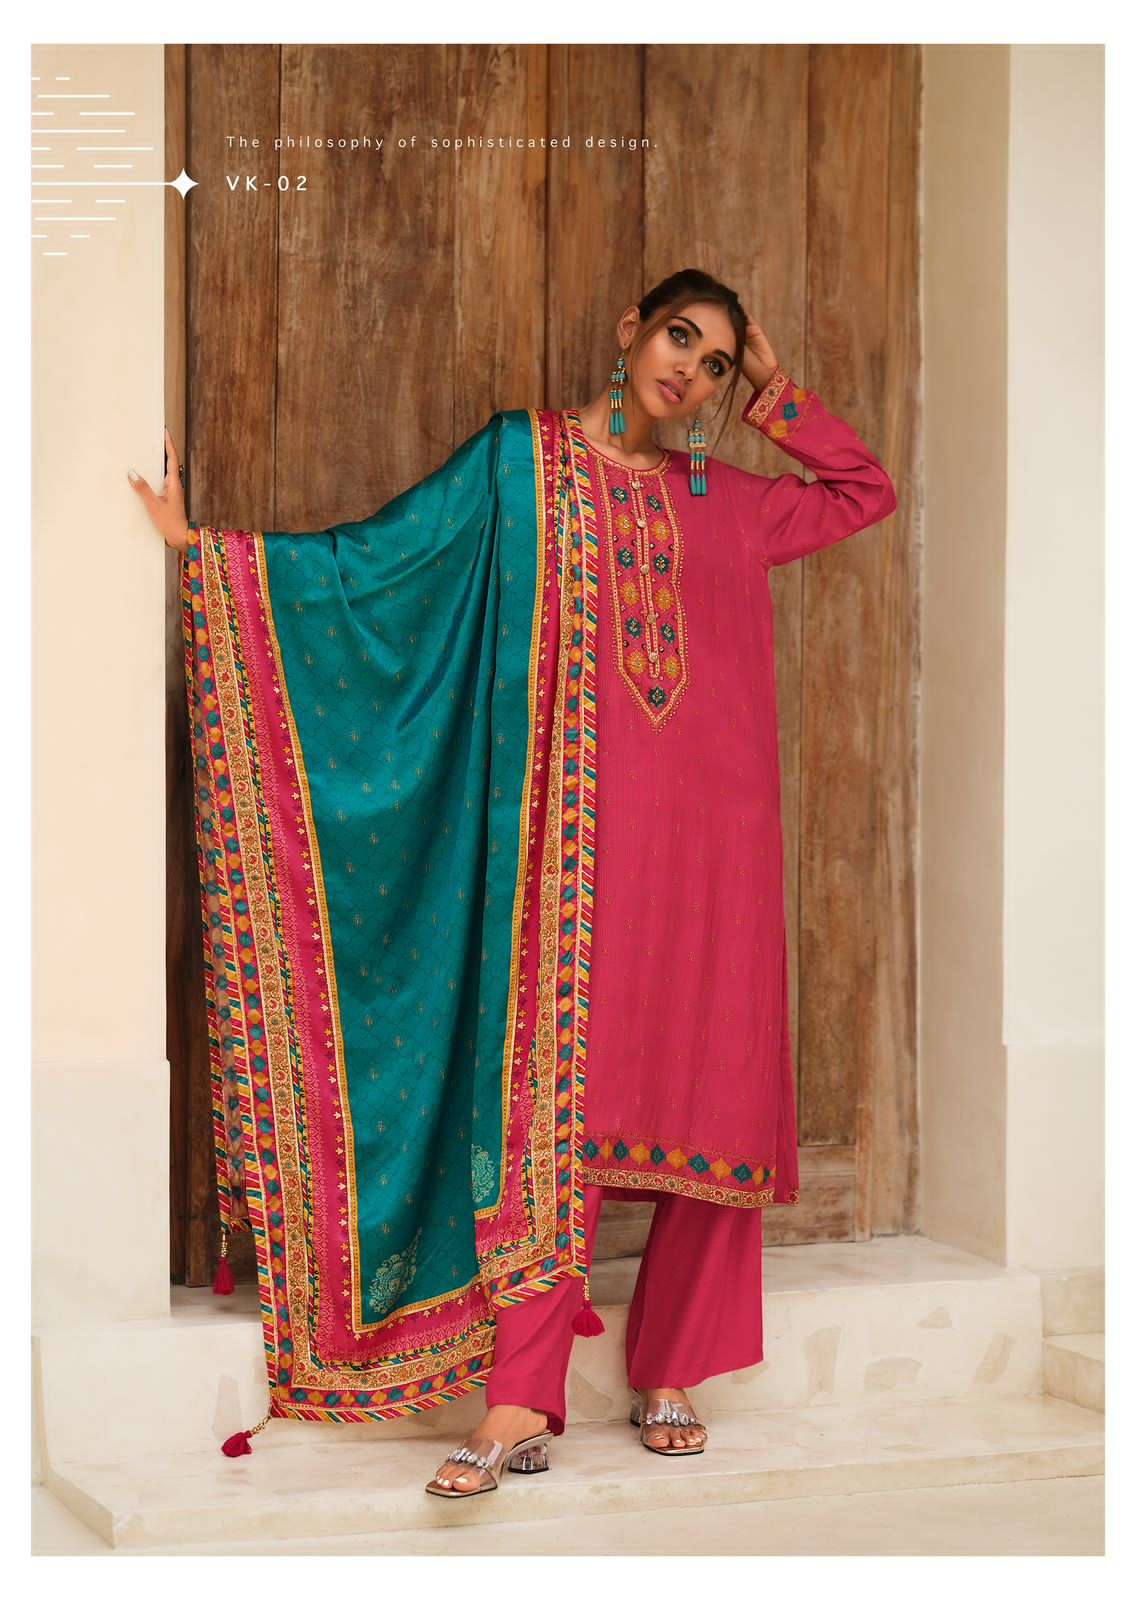 varsha fashion varnika series latest pakistani salwar kameez wholesaler india surat gujarat